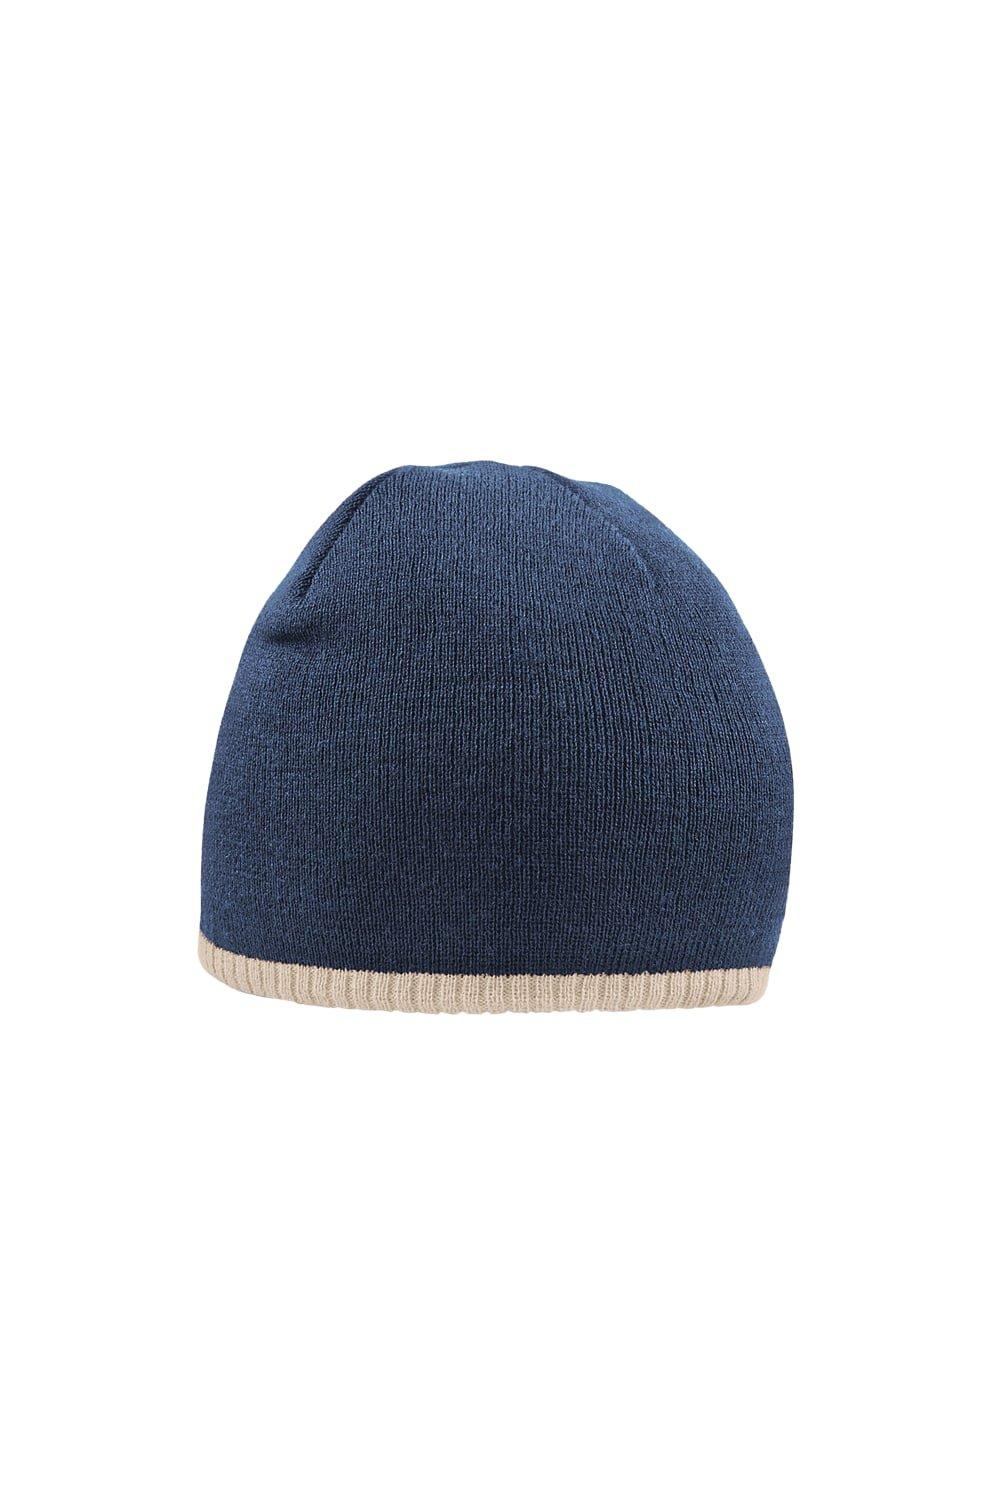 Двухцветная вязаная шапка Beechfield, темно-синий двухцветная вязаная шапка sevenext